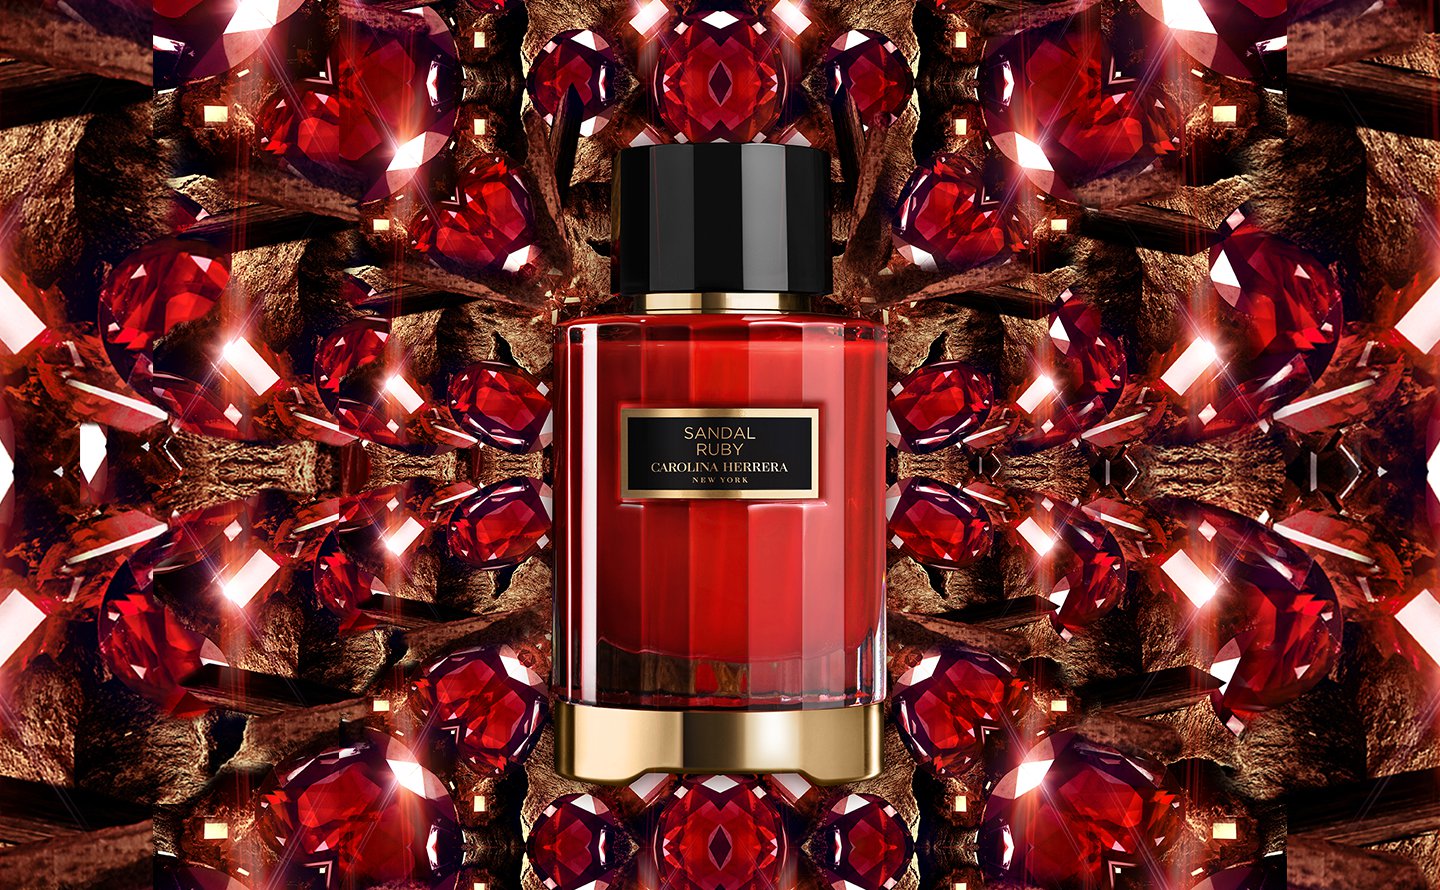 Carolina Herrera Sandal Ruby Perfume